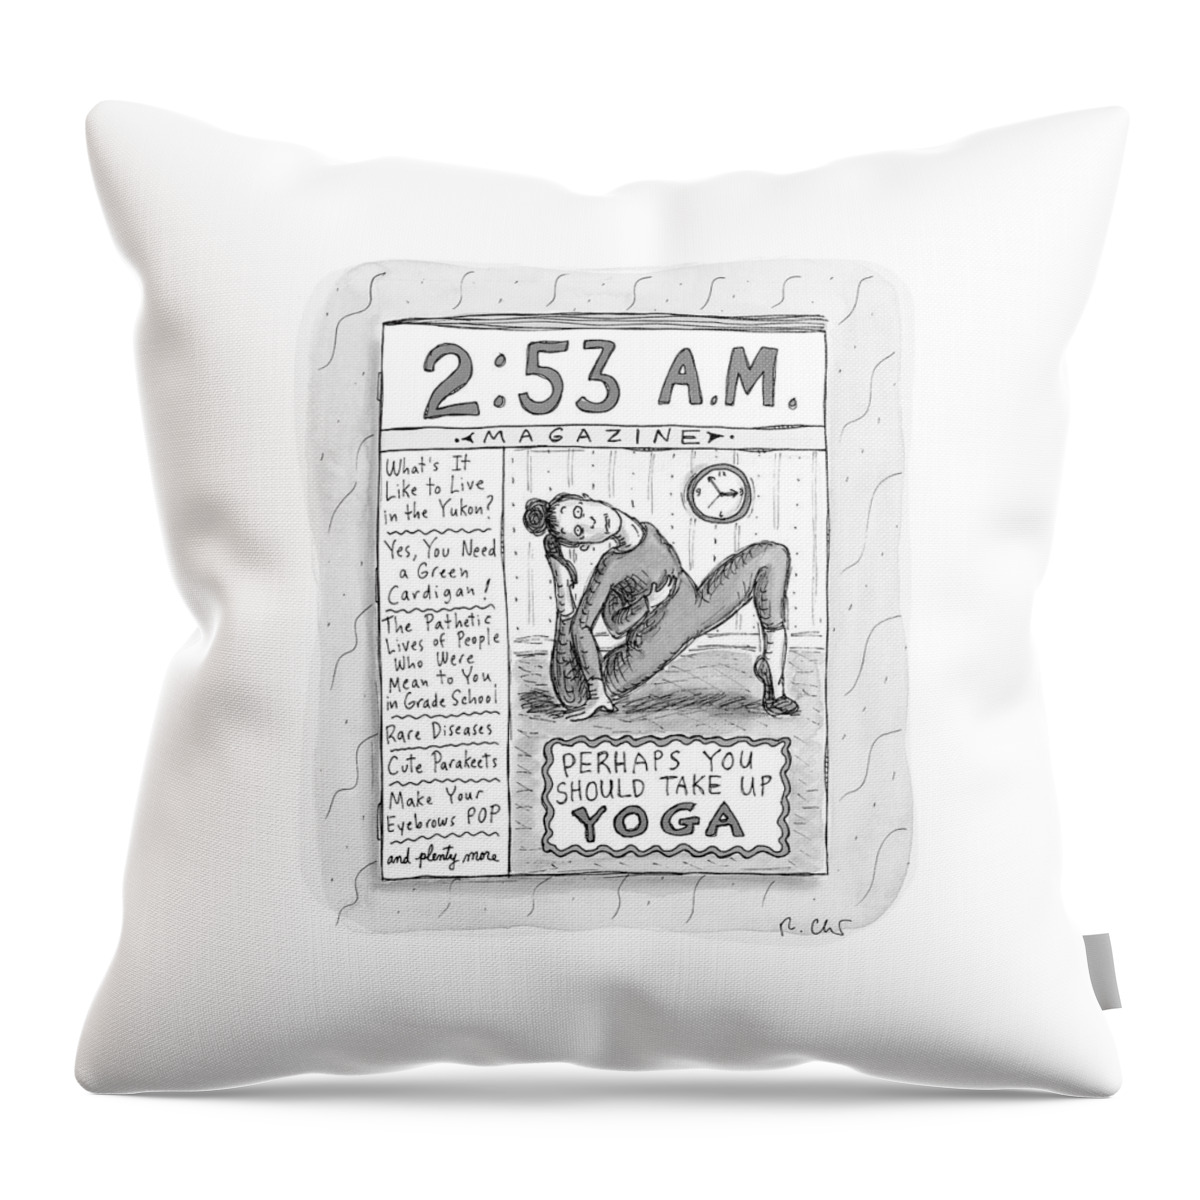 New Yorker August 23, 2021 Throw Pillow